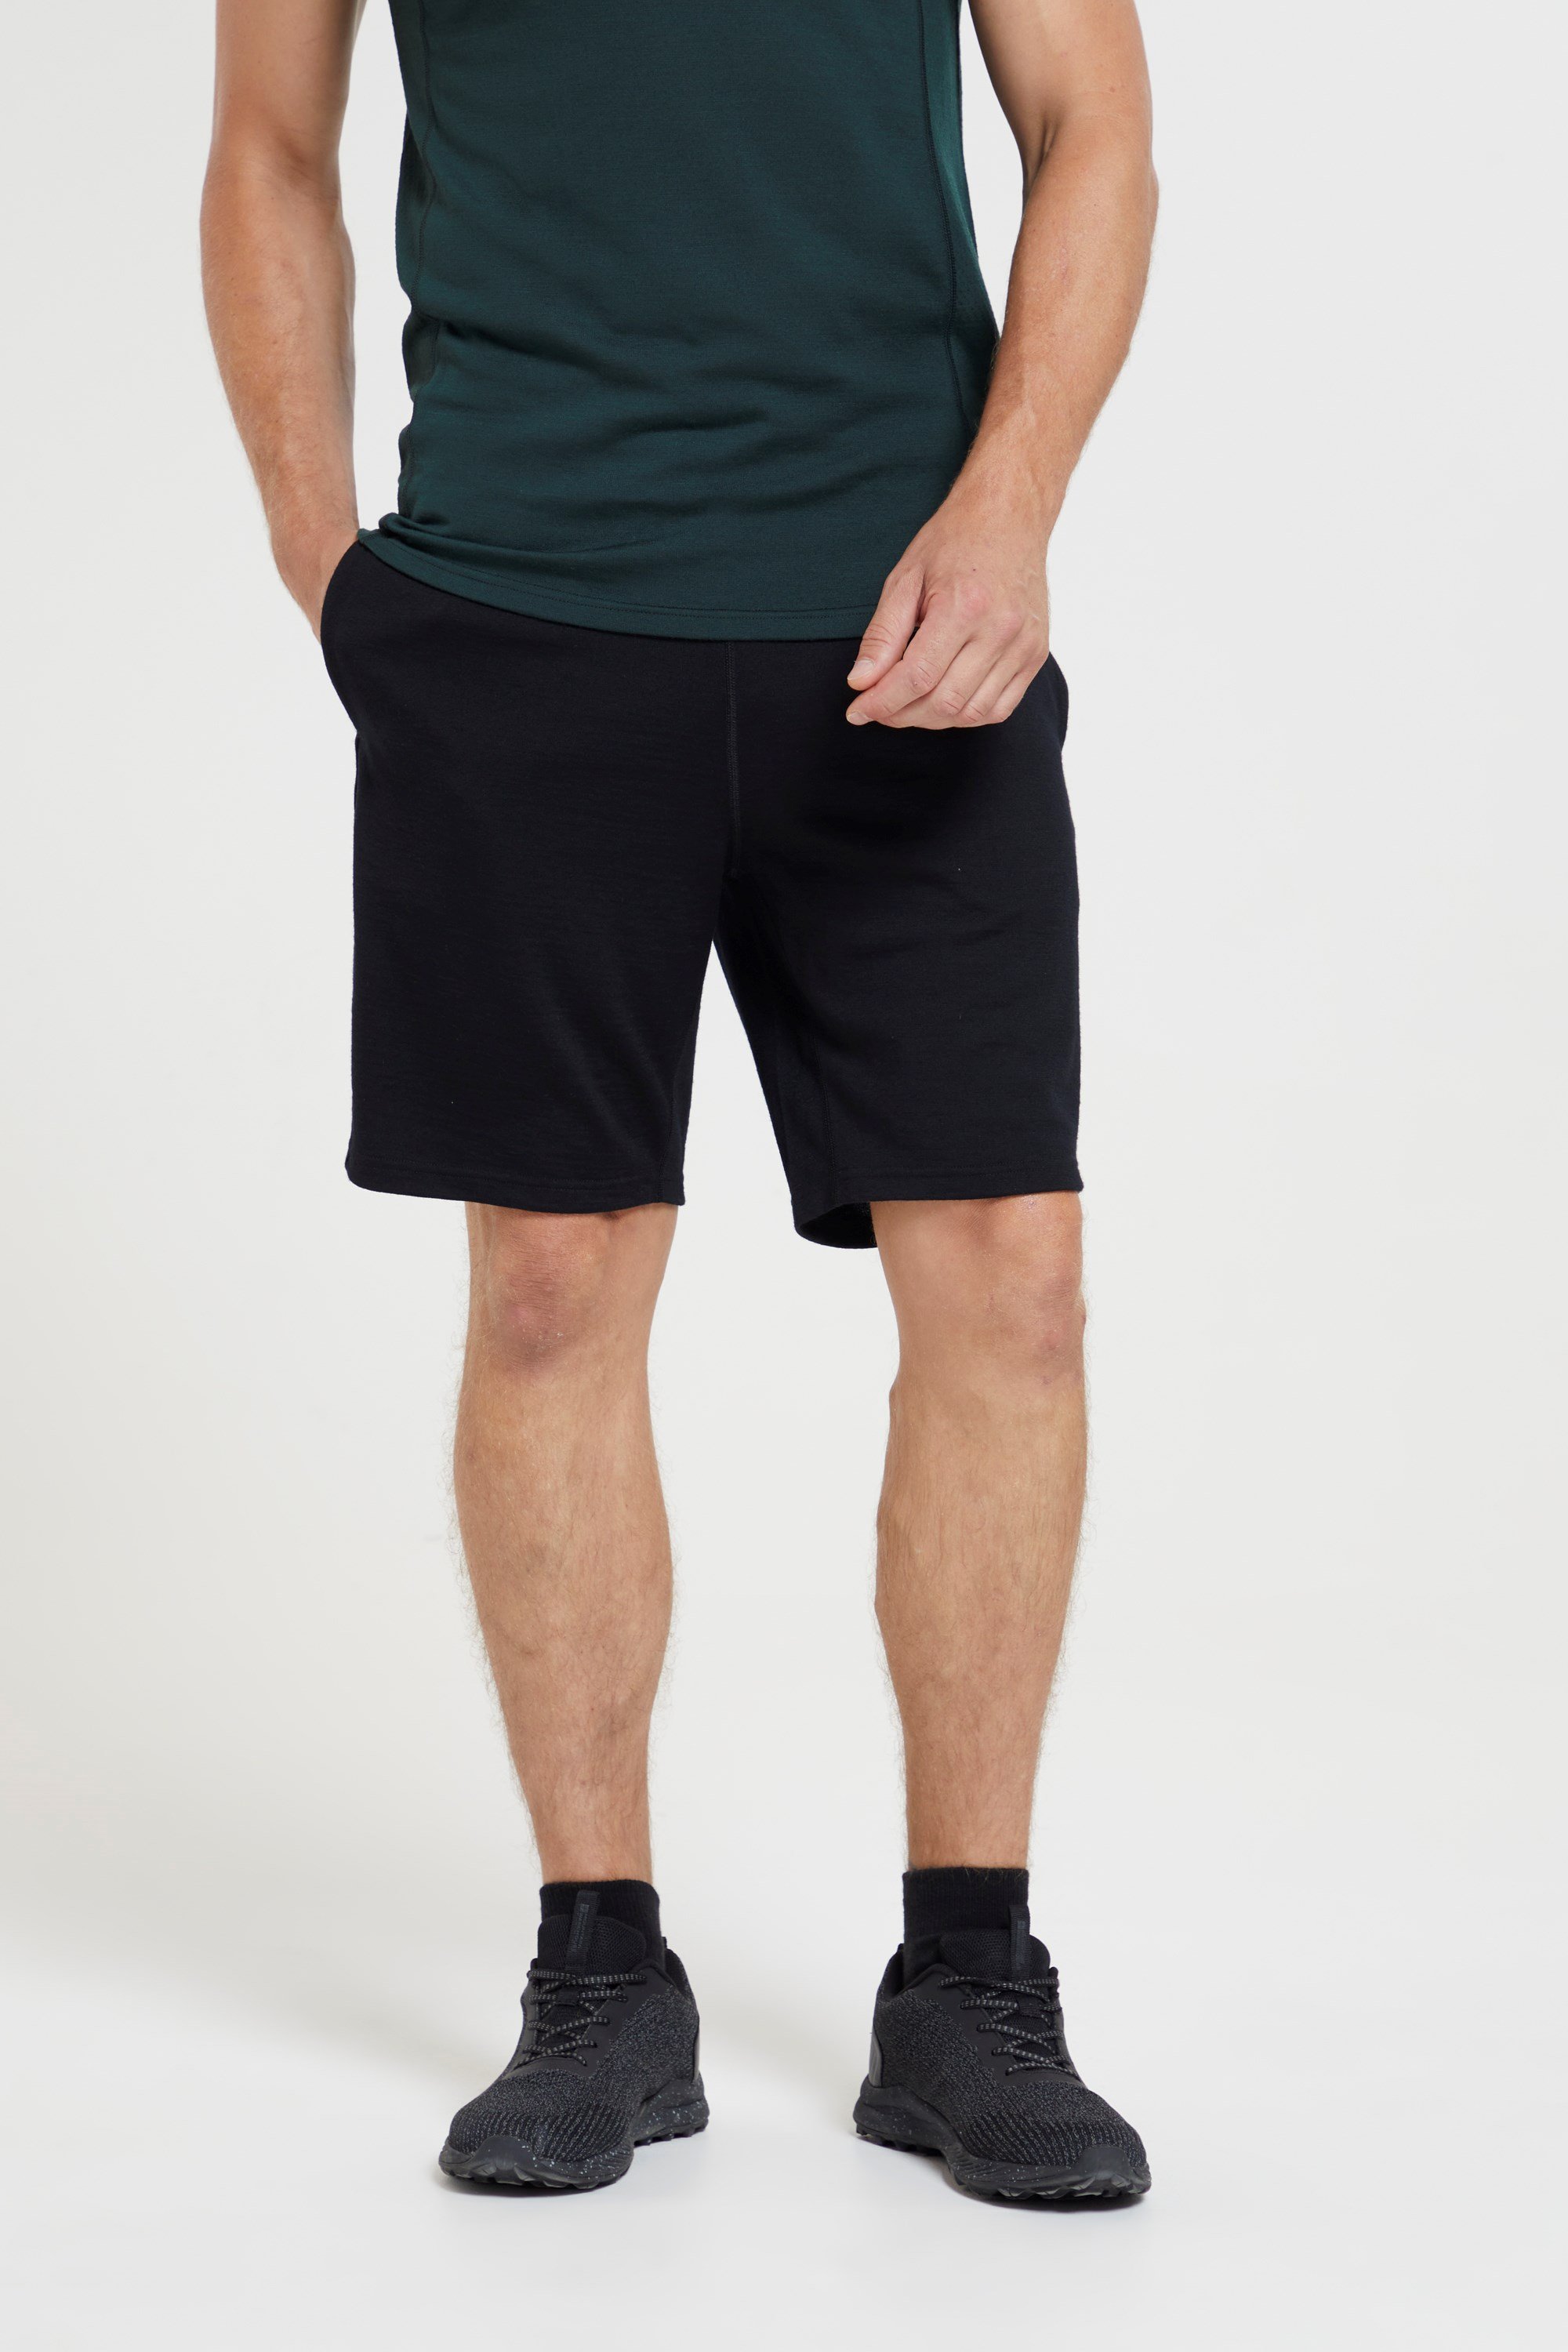 Woolly Clothing Men's Merino Wool Longhaul Shorts : : Clothing &  Accessories